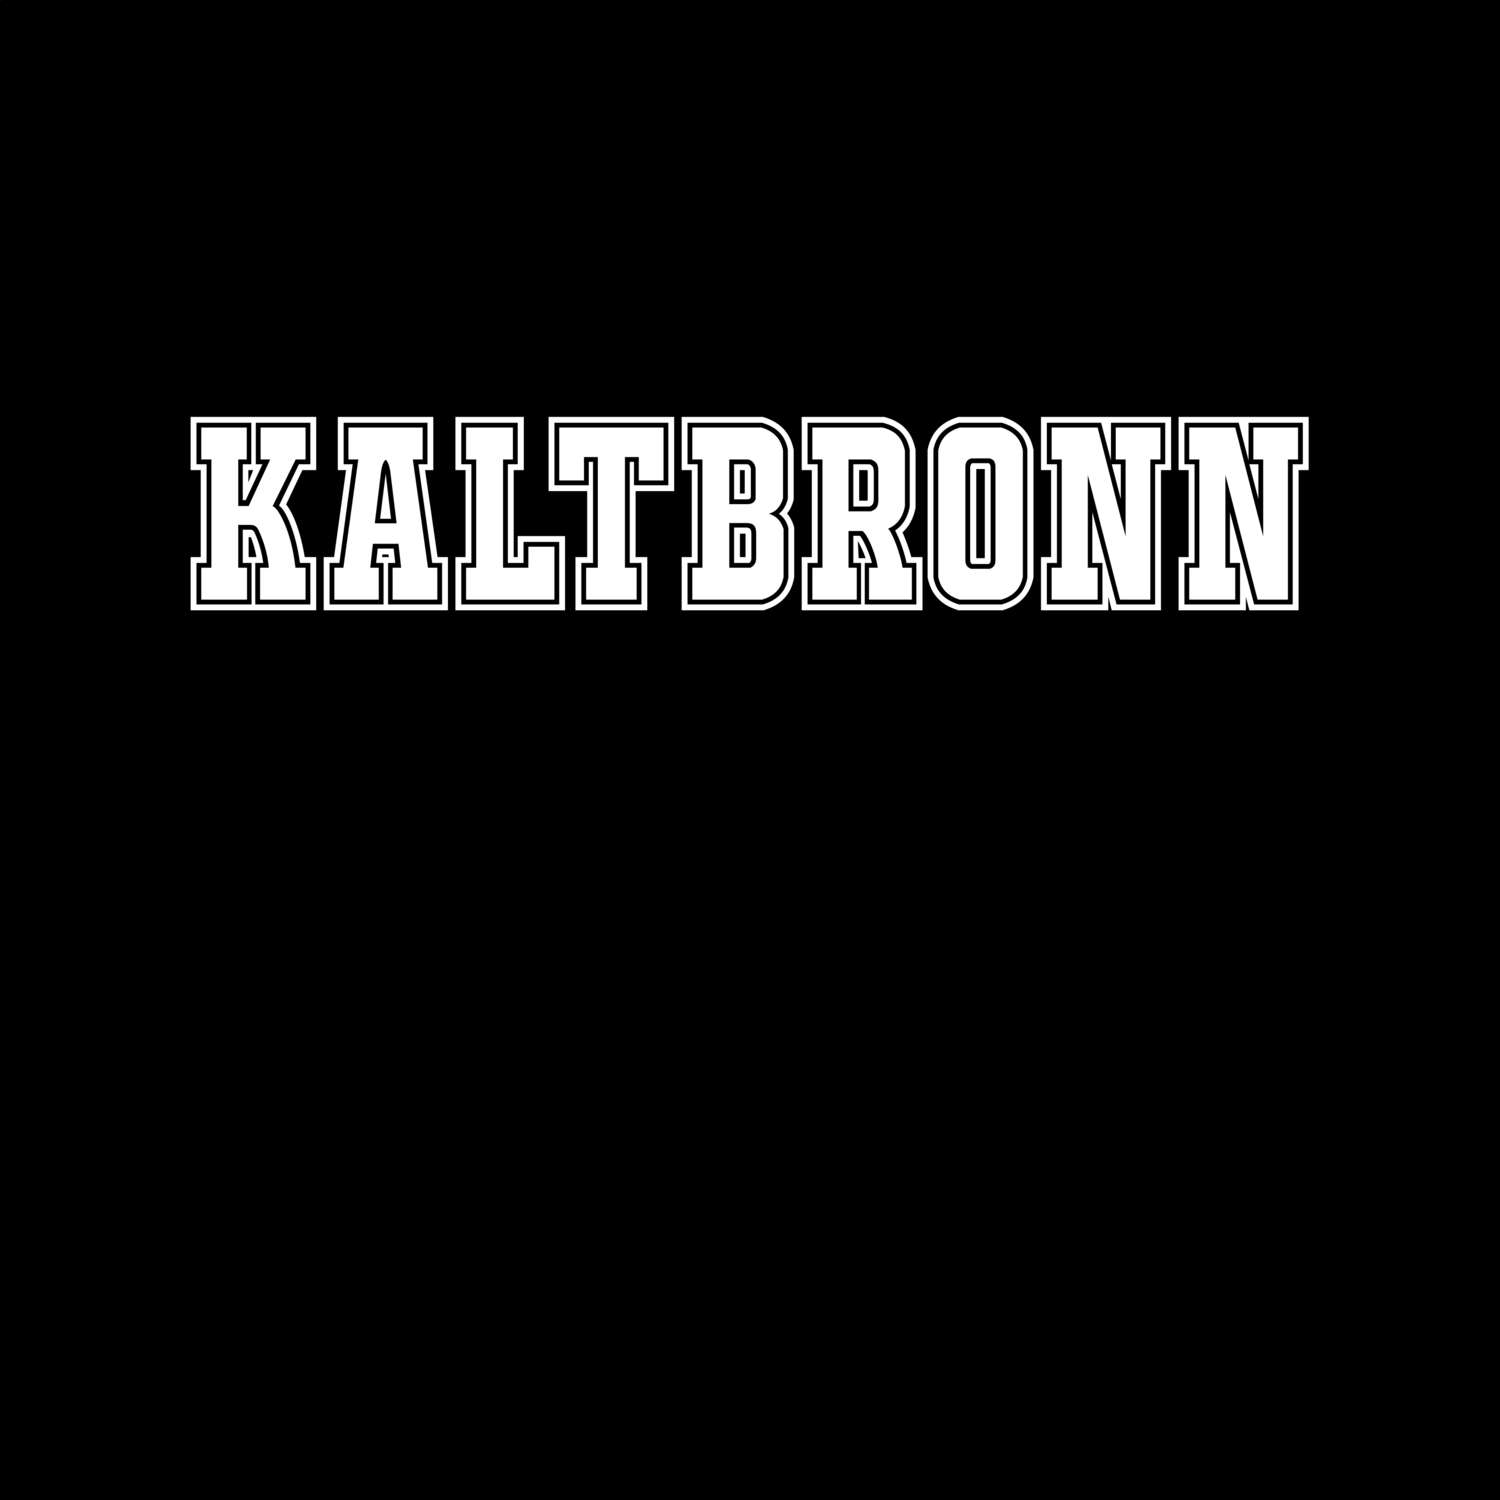 Kaltbronn T-Shirt »Classic«